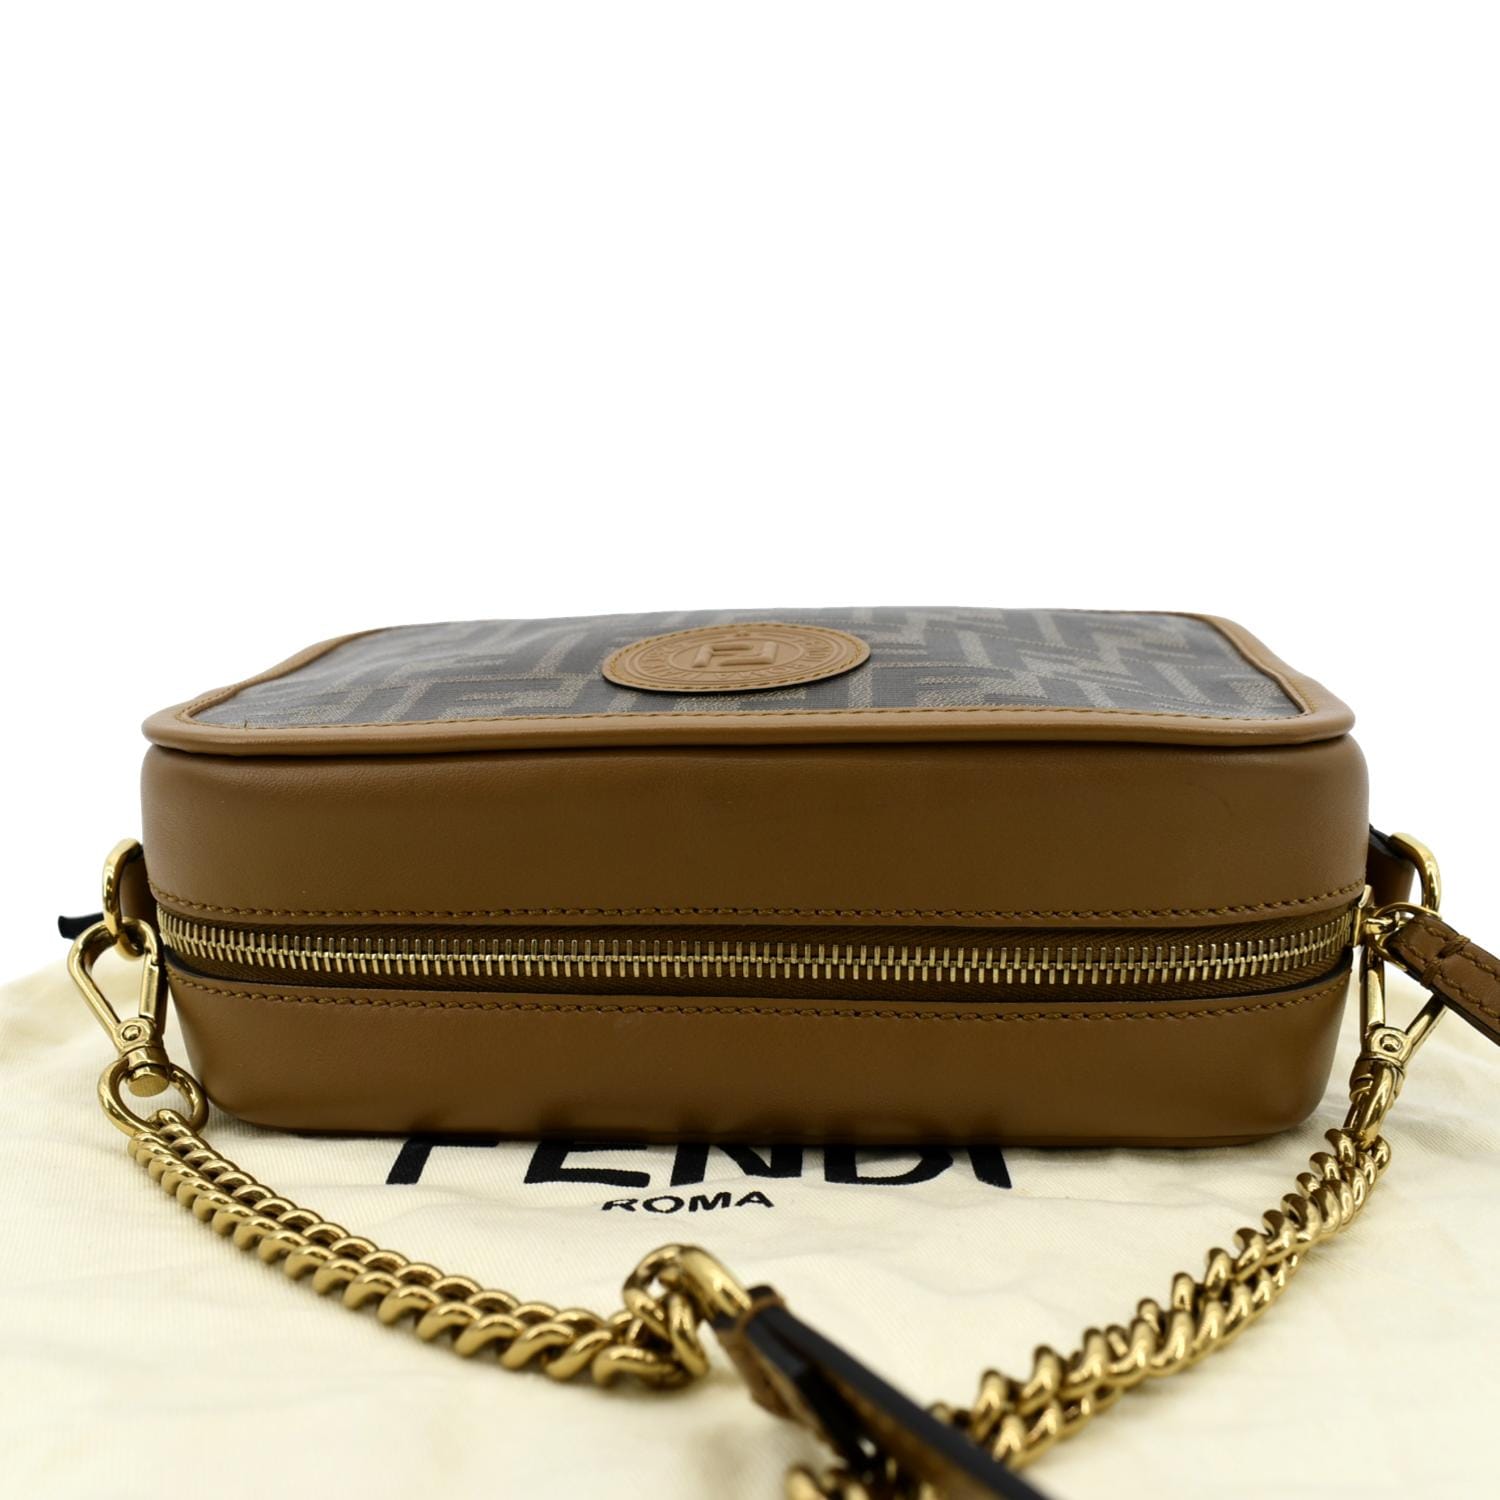 Wallets & purses Fendi - FF logo wallet in black and brown